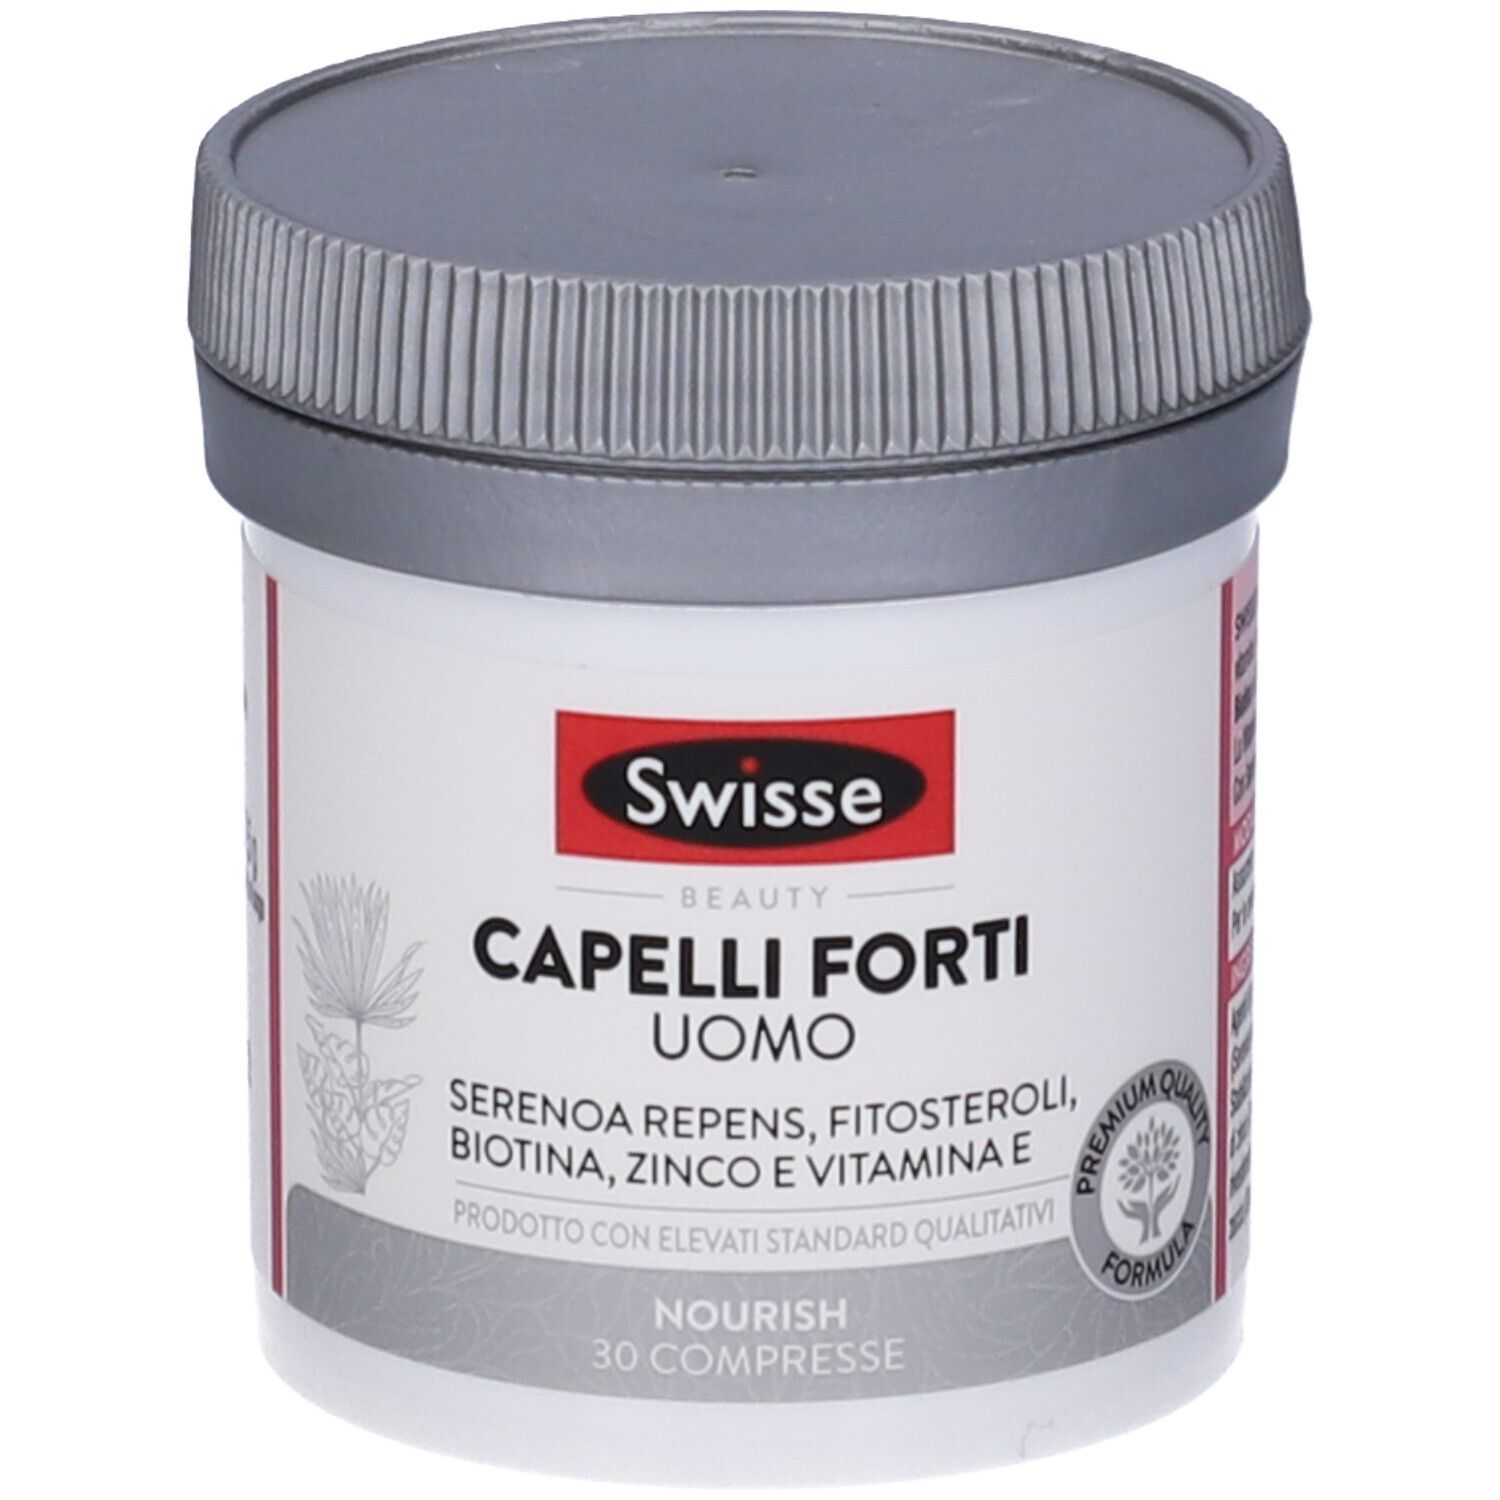 Swisse Beauty Capelli Forti Uomo